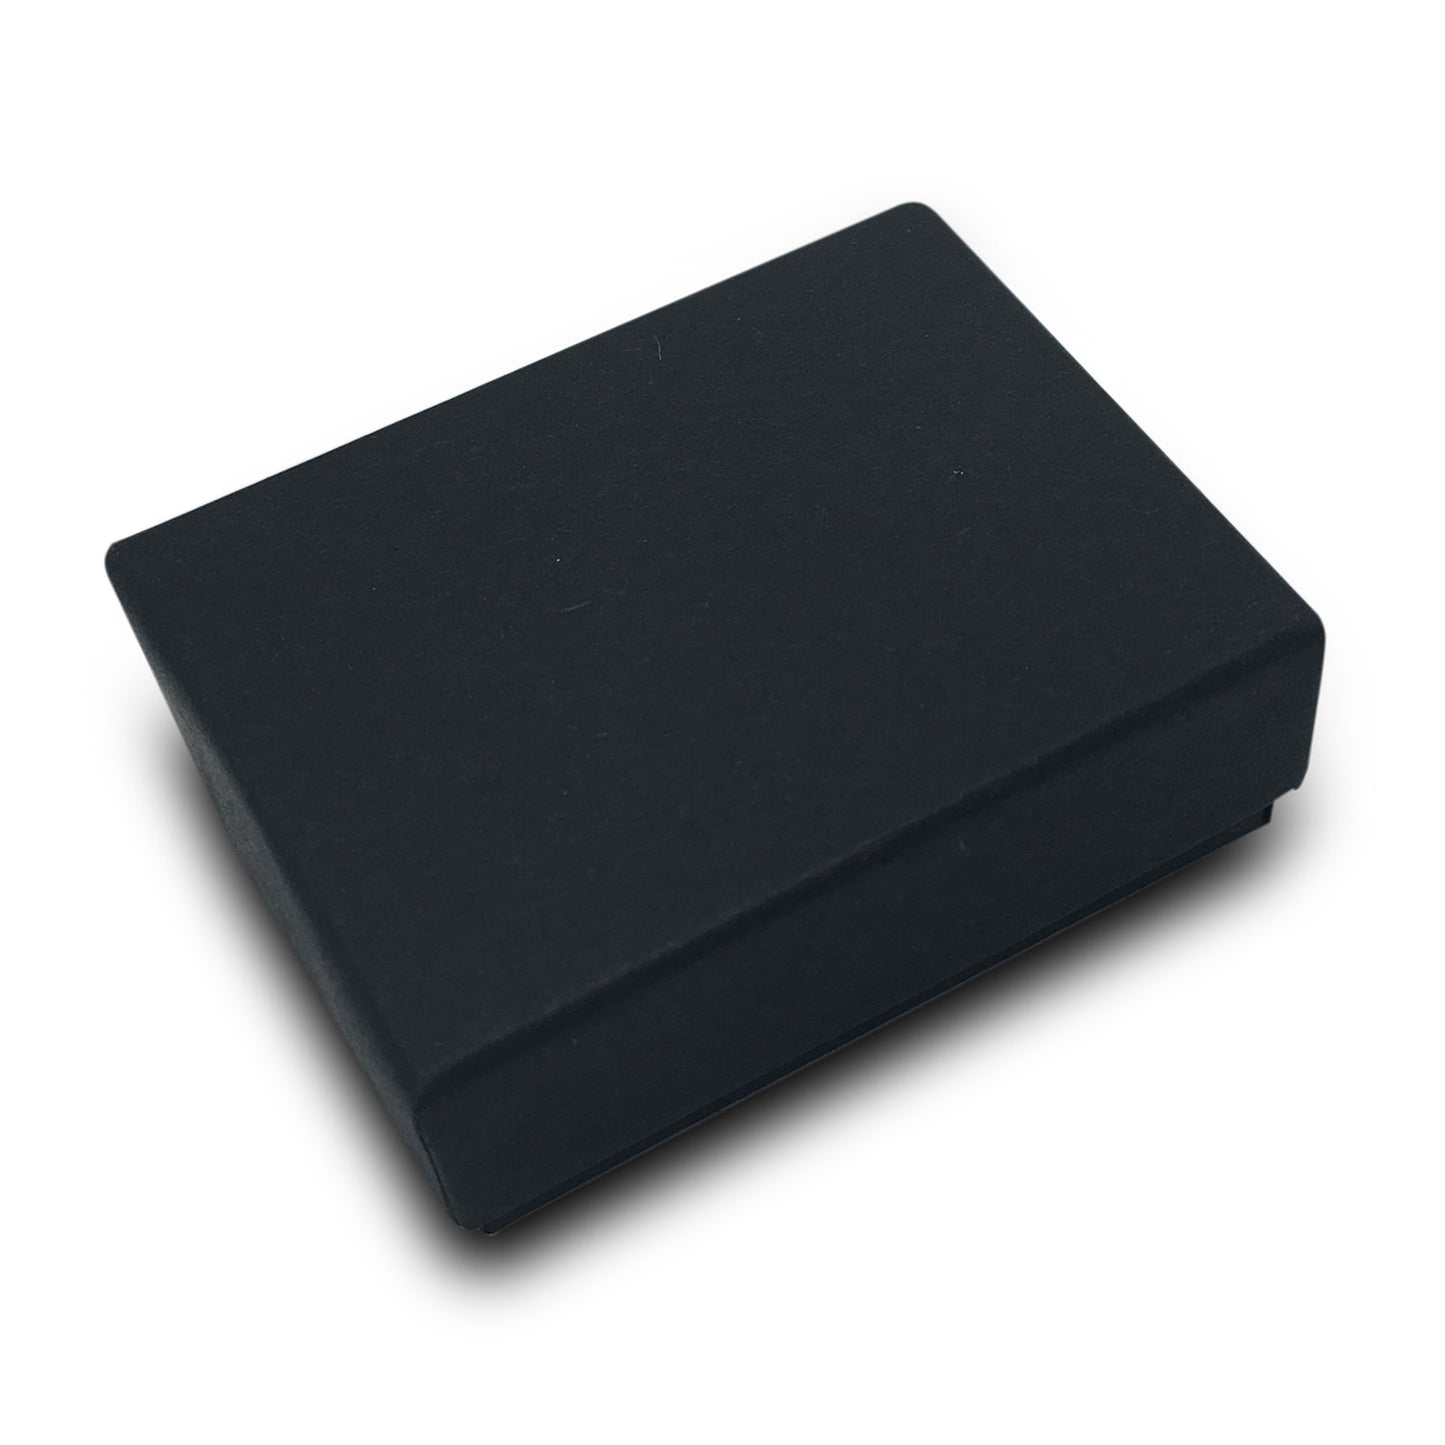 1 7/8"Wx1 1/4"Dx 5/8"H Matte Black Cotton Filled Paper Box